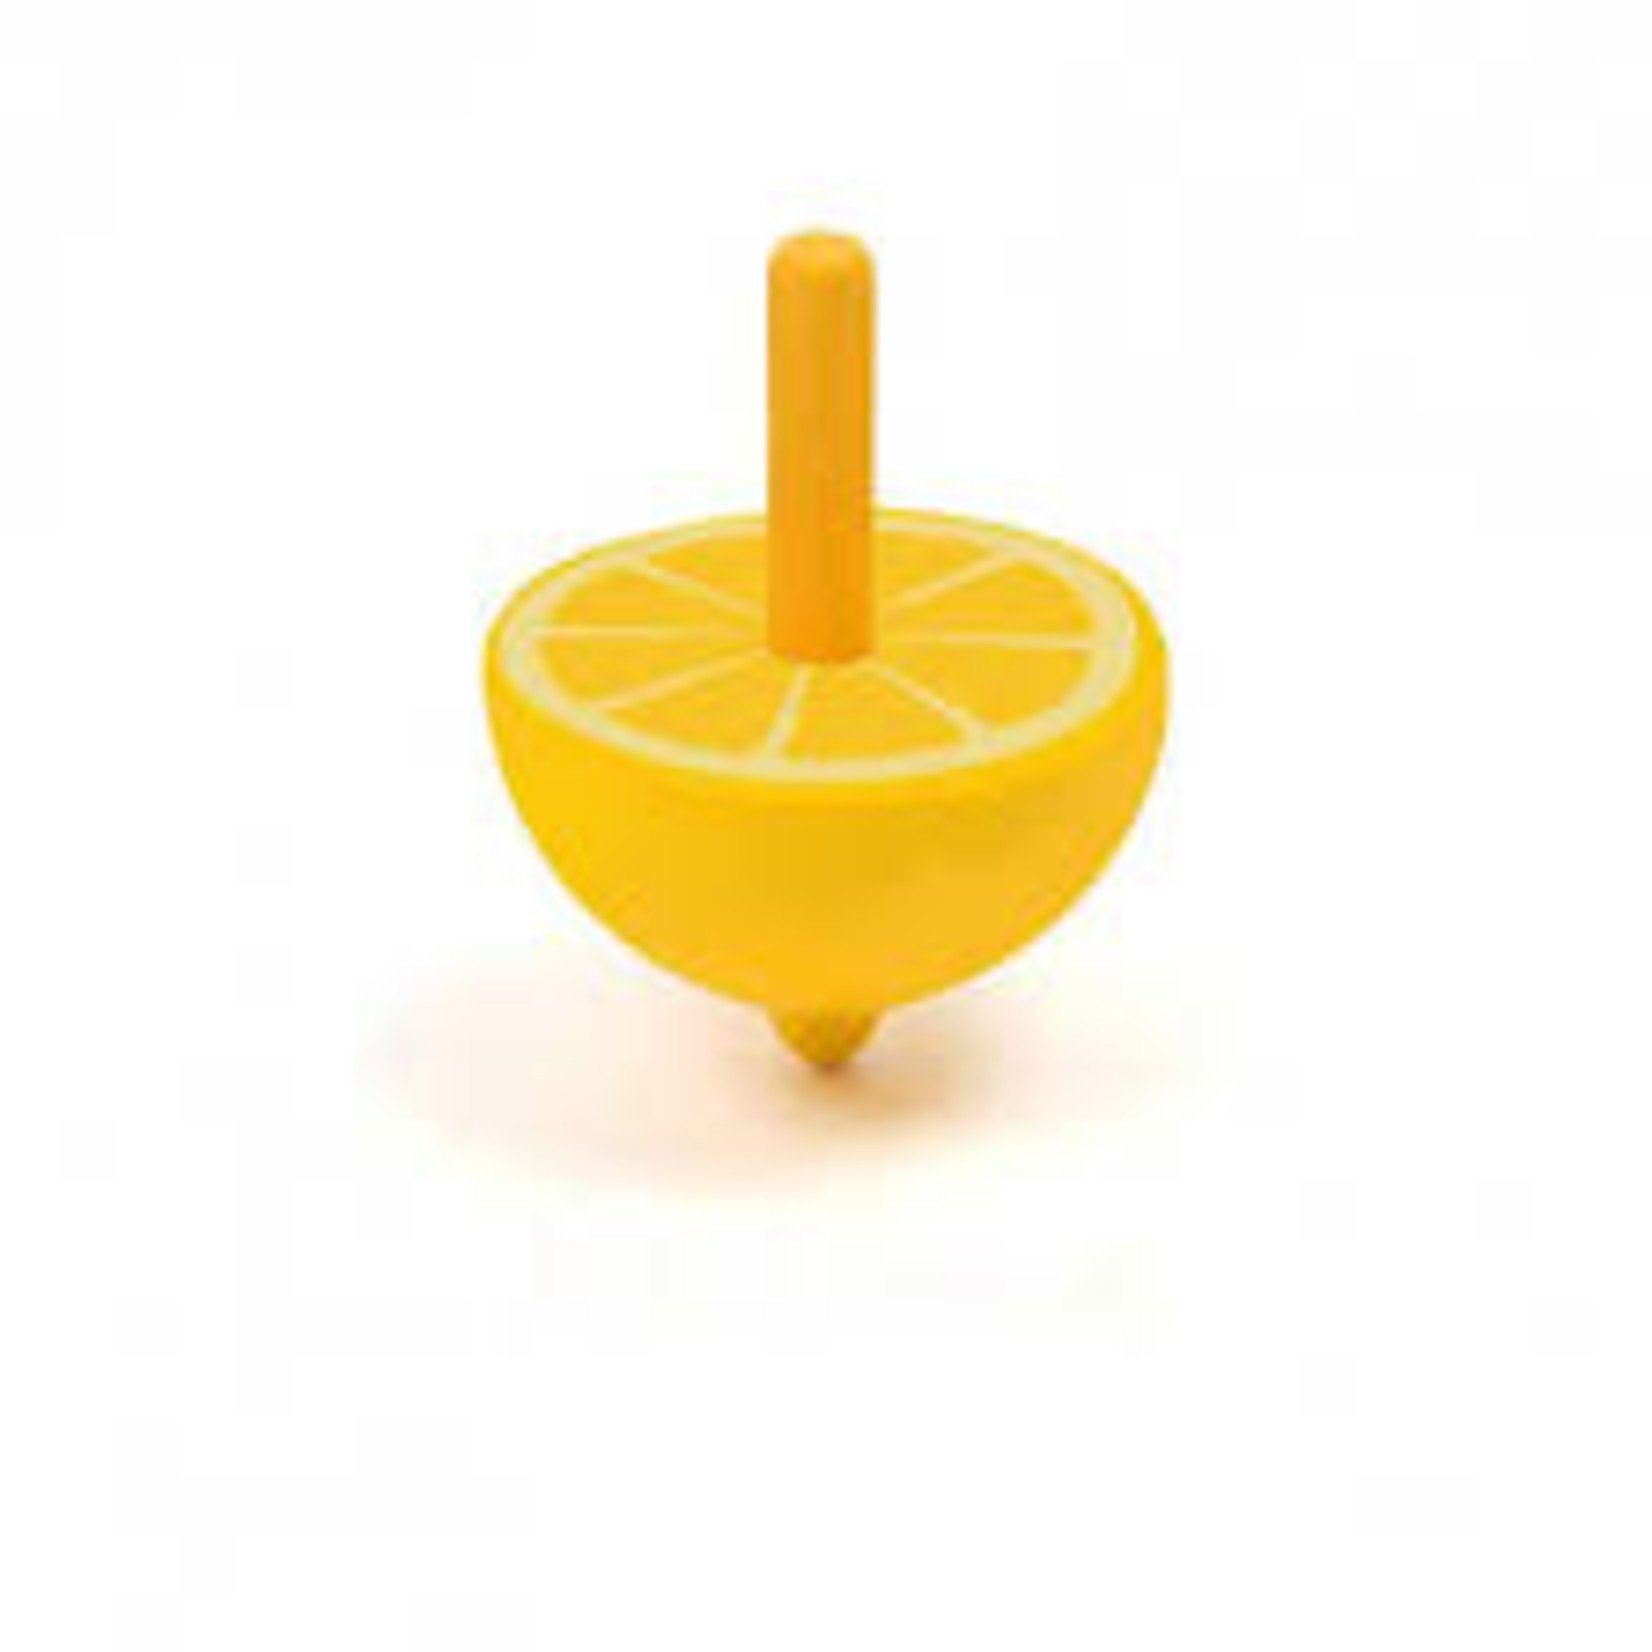 Mideer Mideer-AW20 MD2025 Mini Tops - Lemon